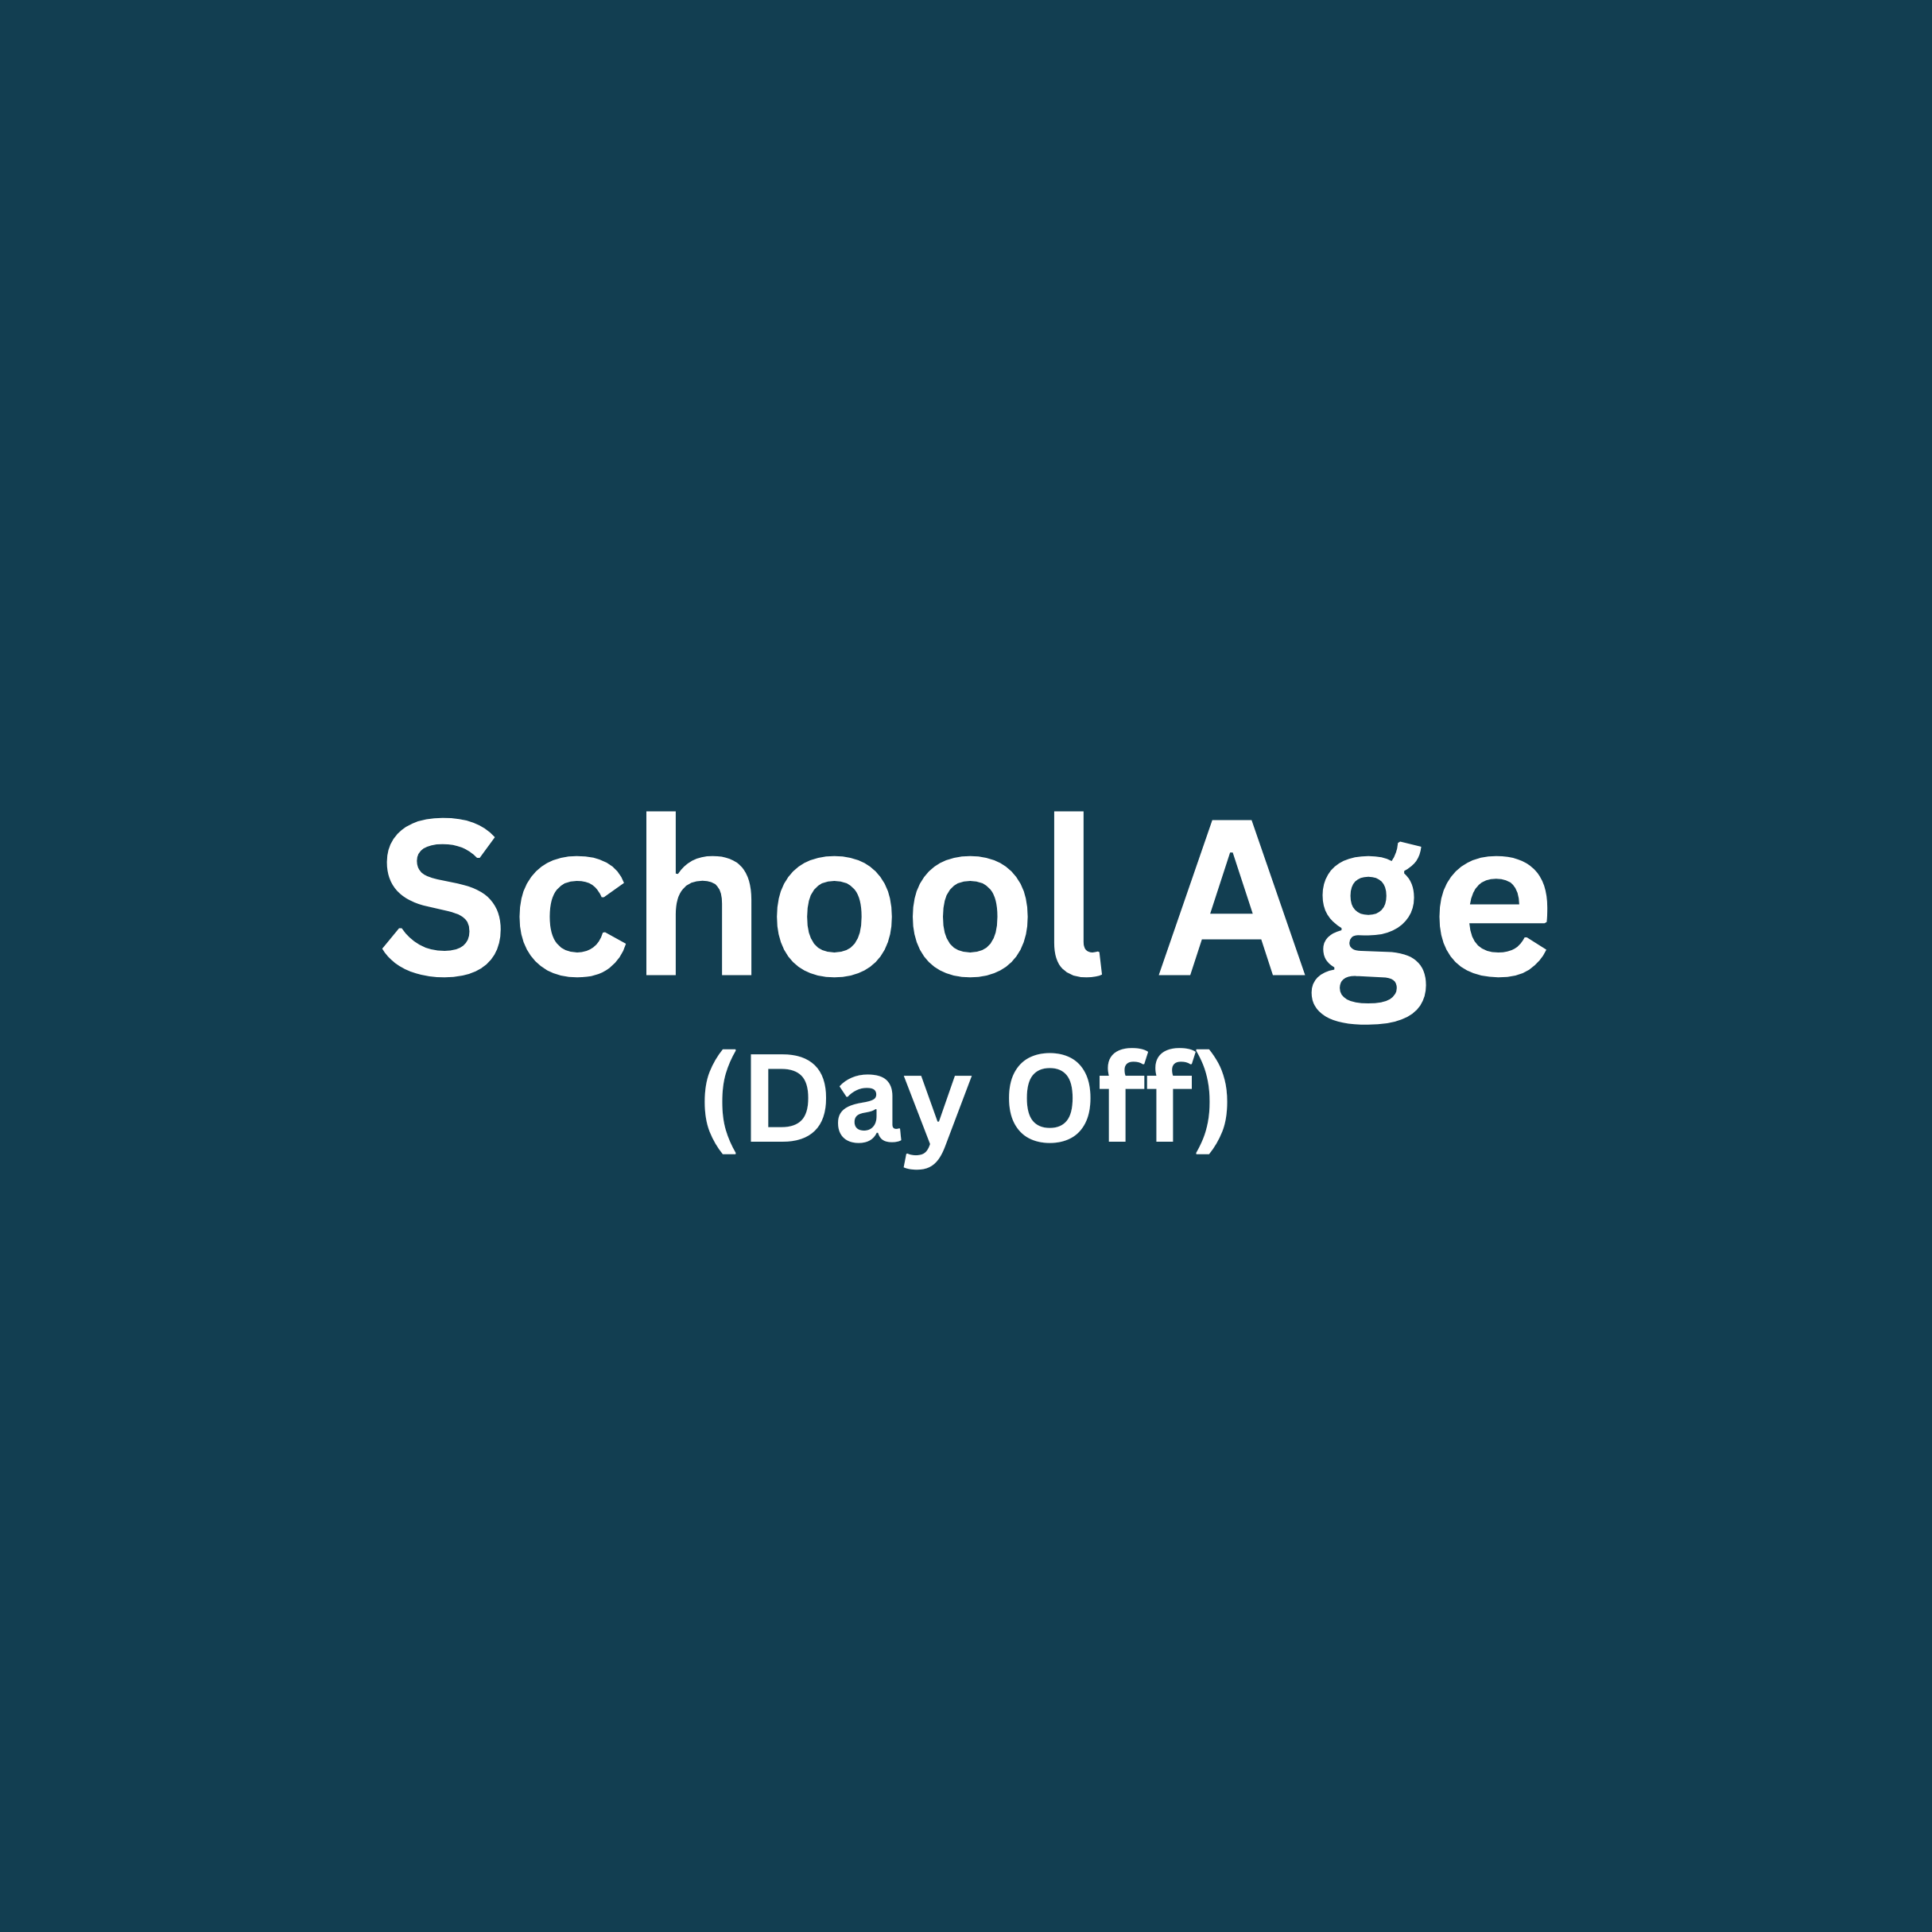 School Age (Day Off)